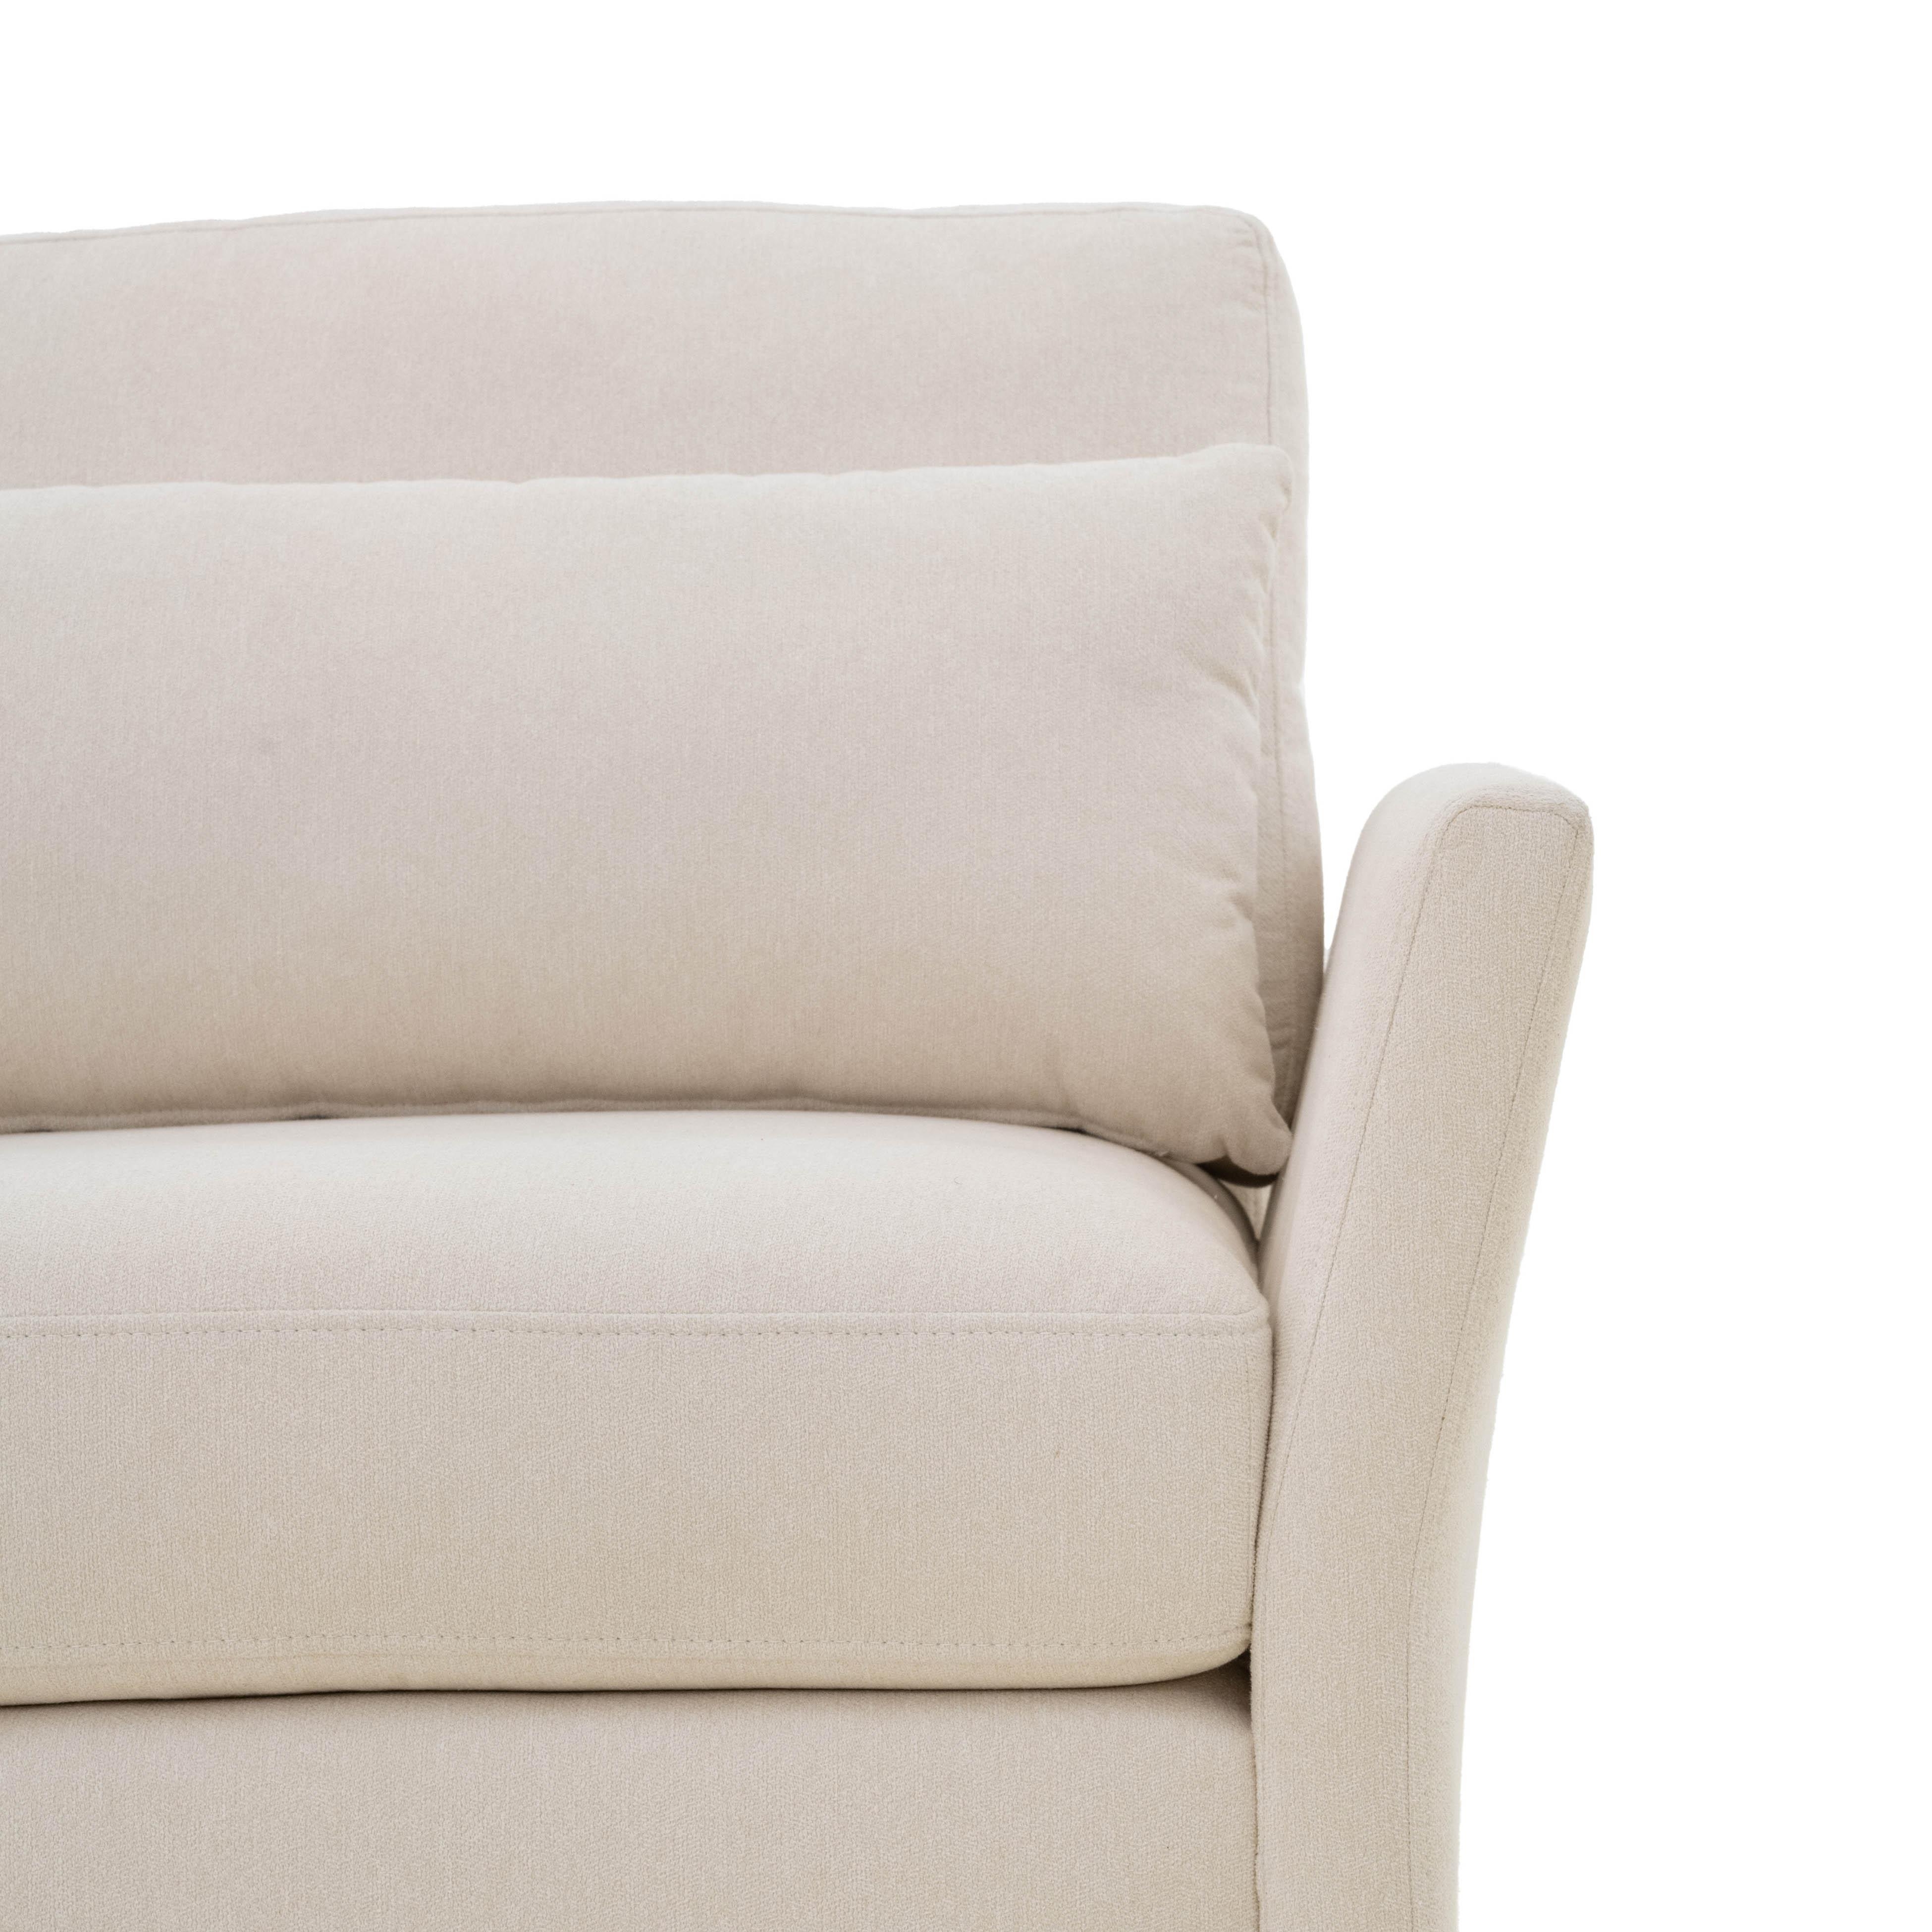 Catarina Cream Swivel Accent Chair - Image 4